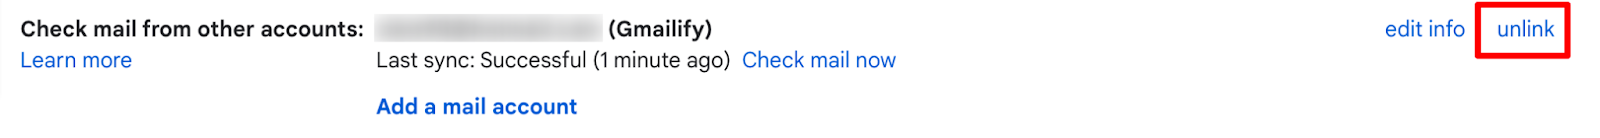 gmail-alias-unlink